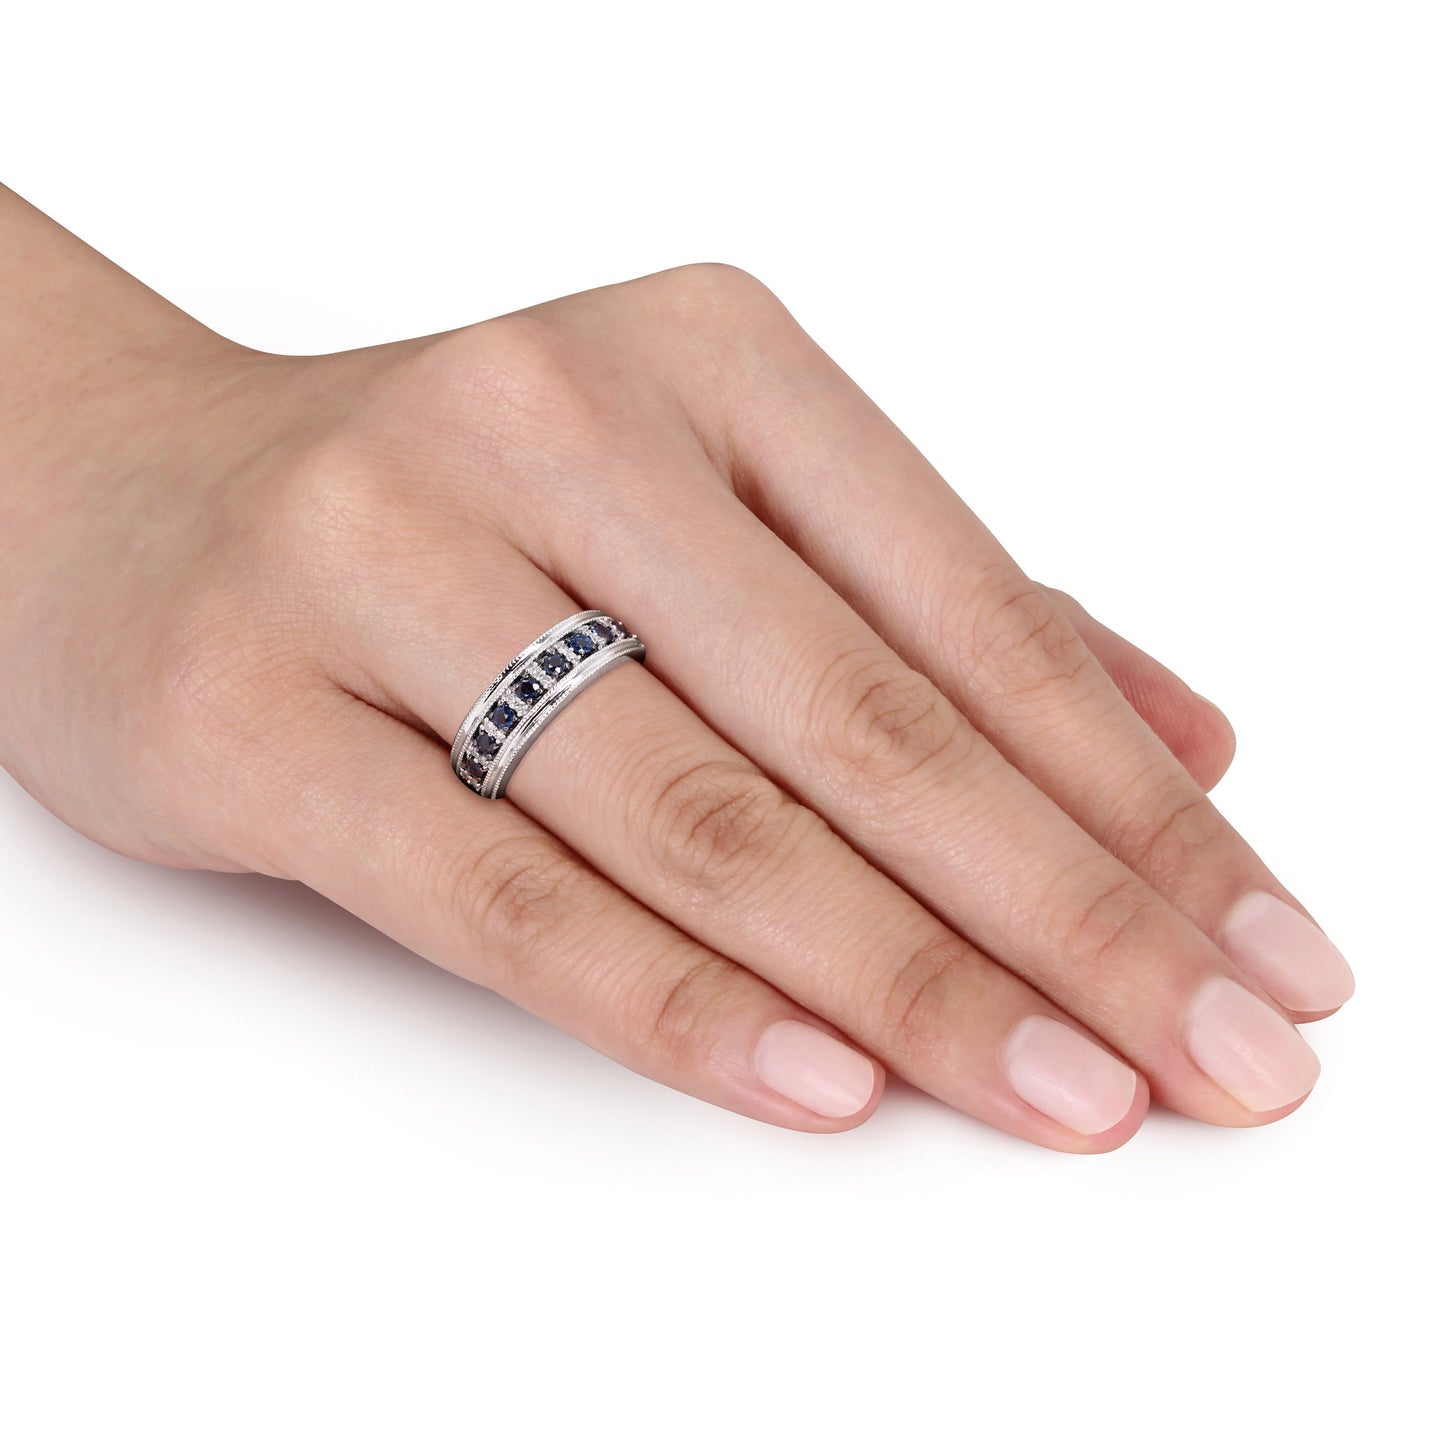 Sapphire & Diamond Semi Eternity Ring in 10k White Gold